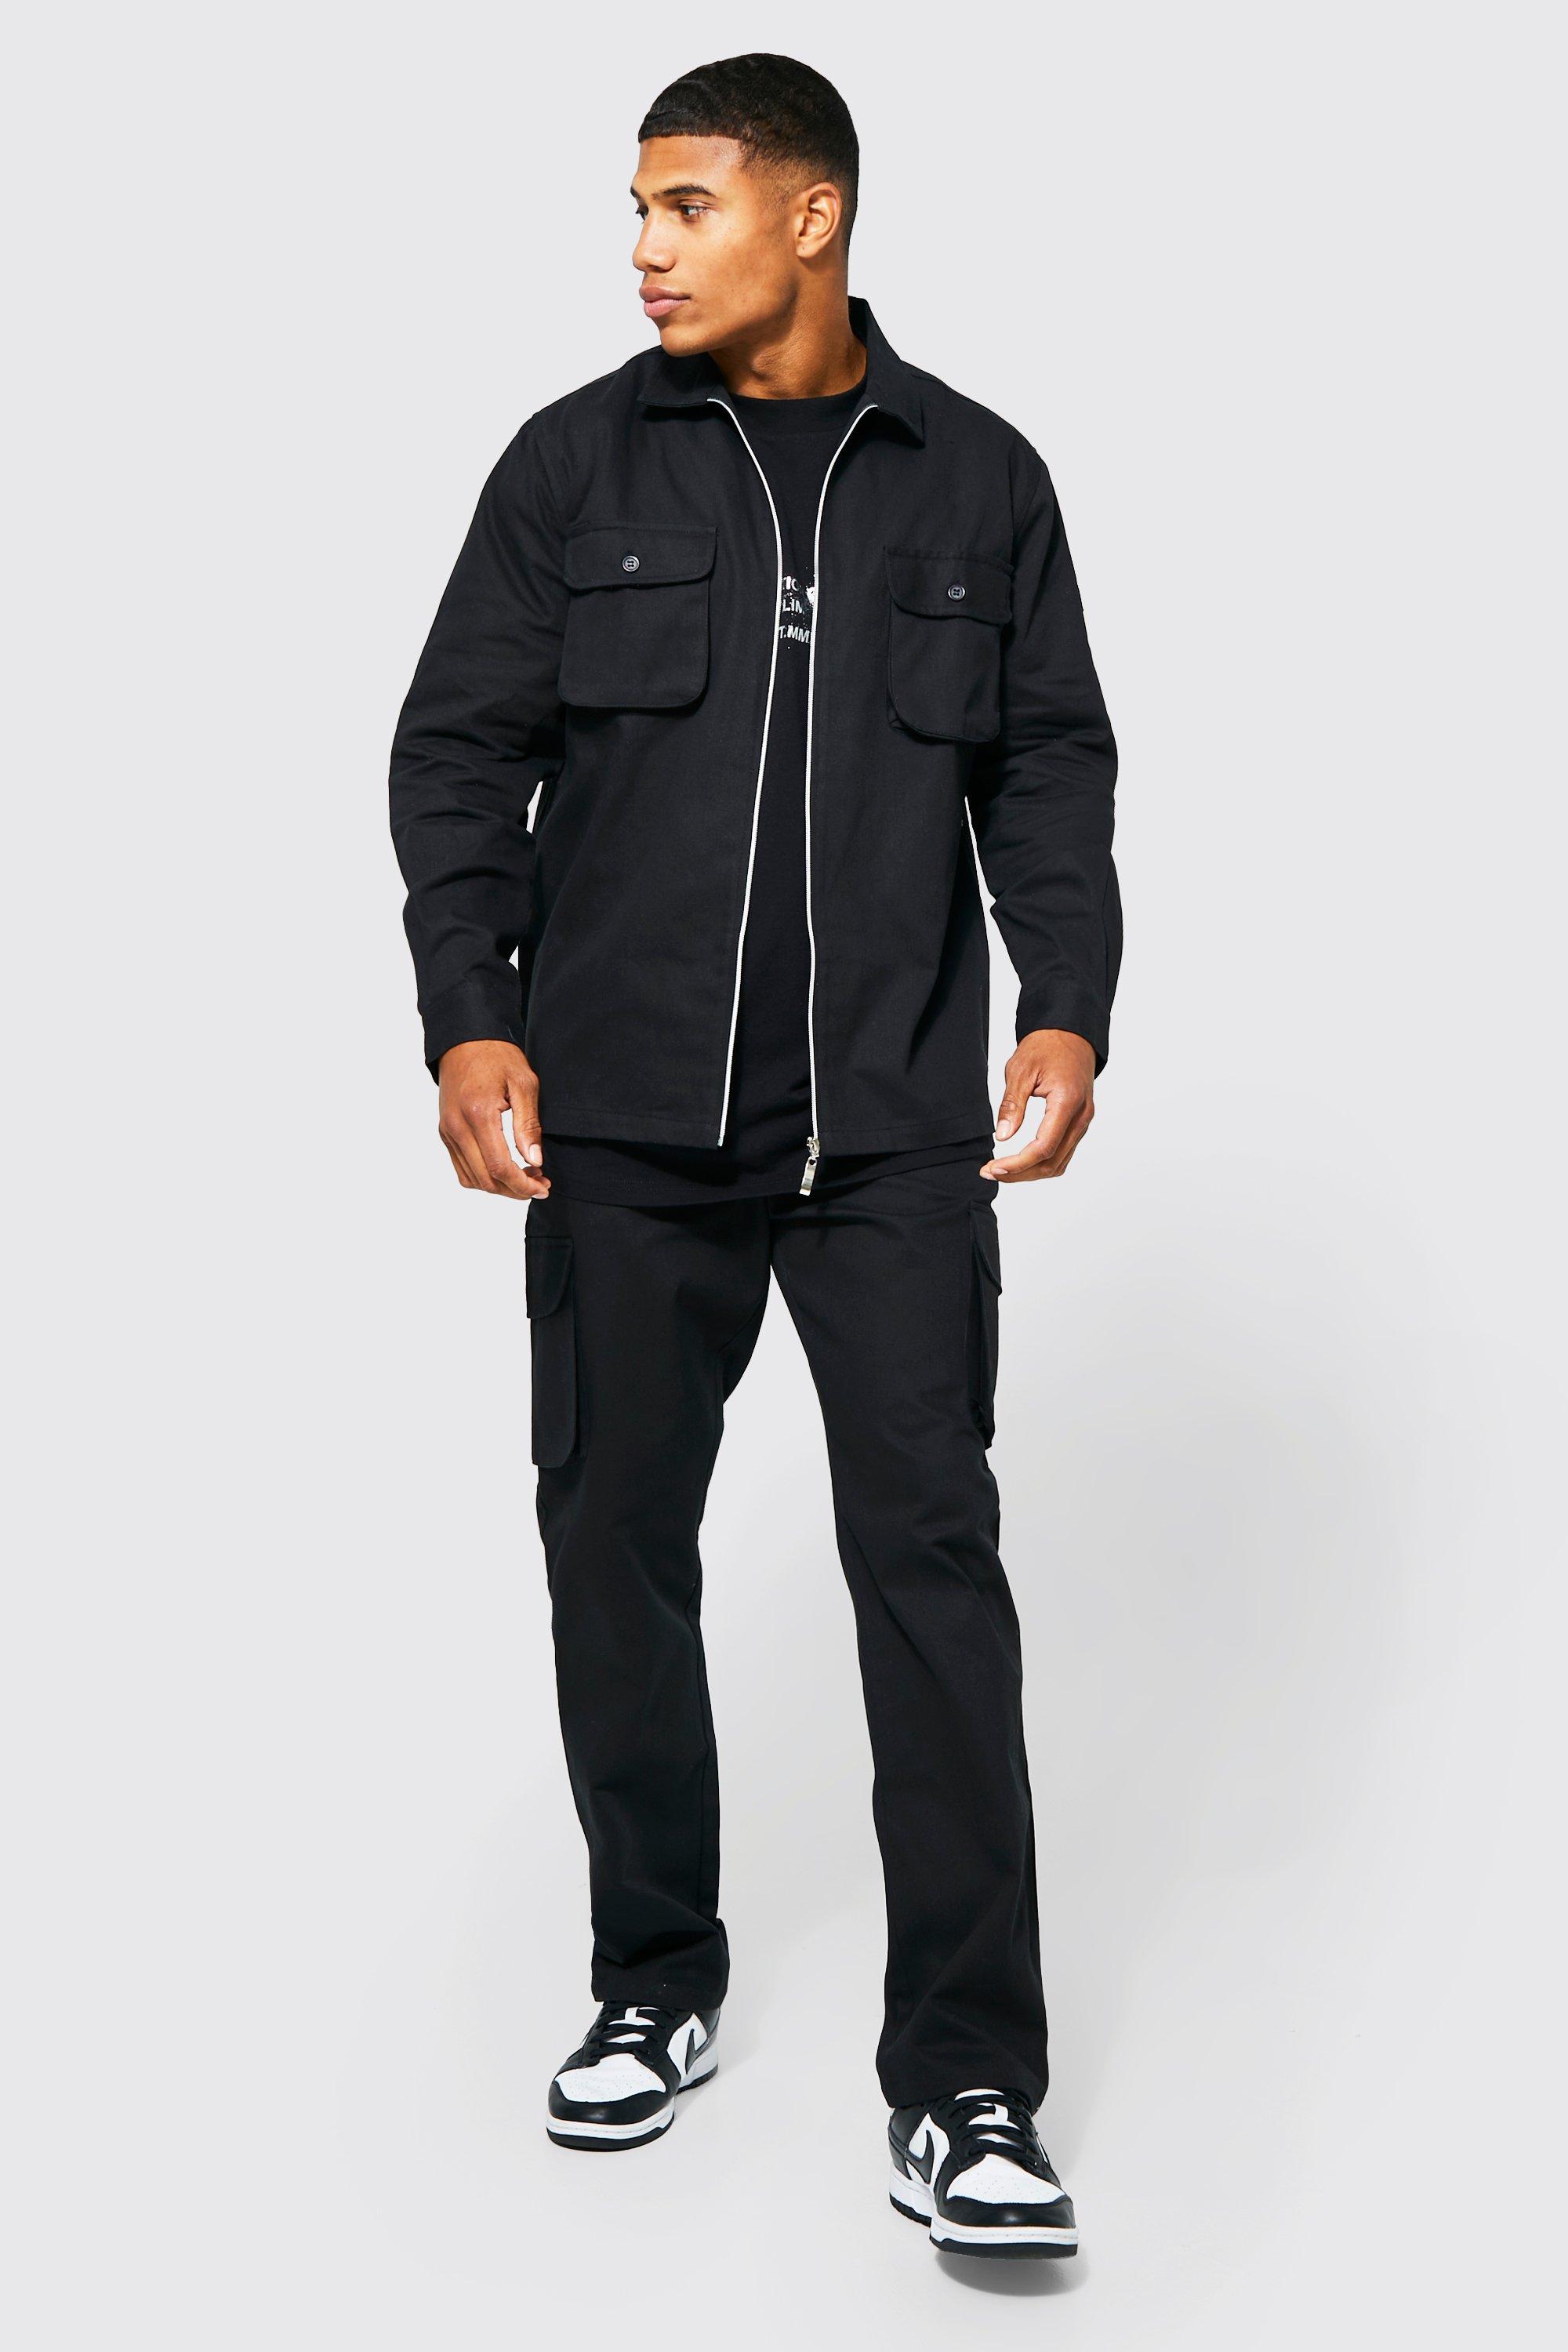 Boohooman Mens Black Utility Zip Shirt And Trouser Set, Black